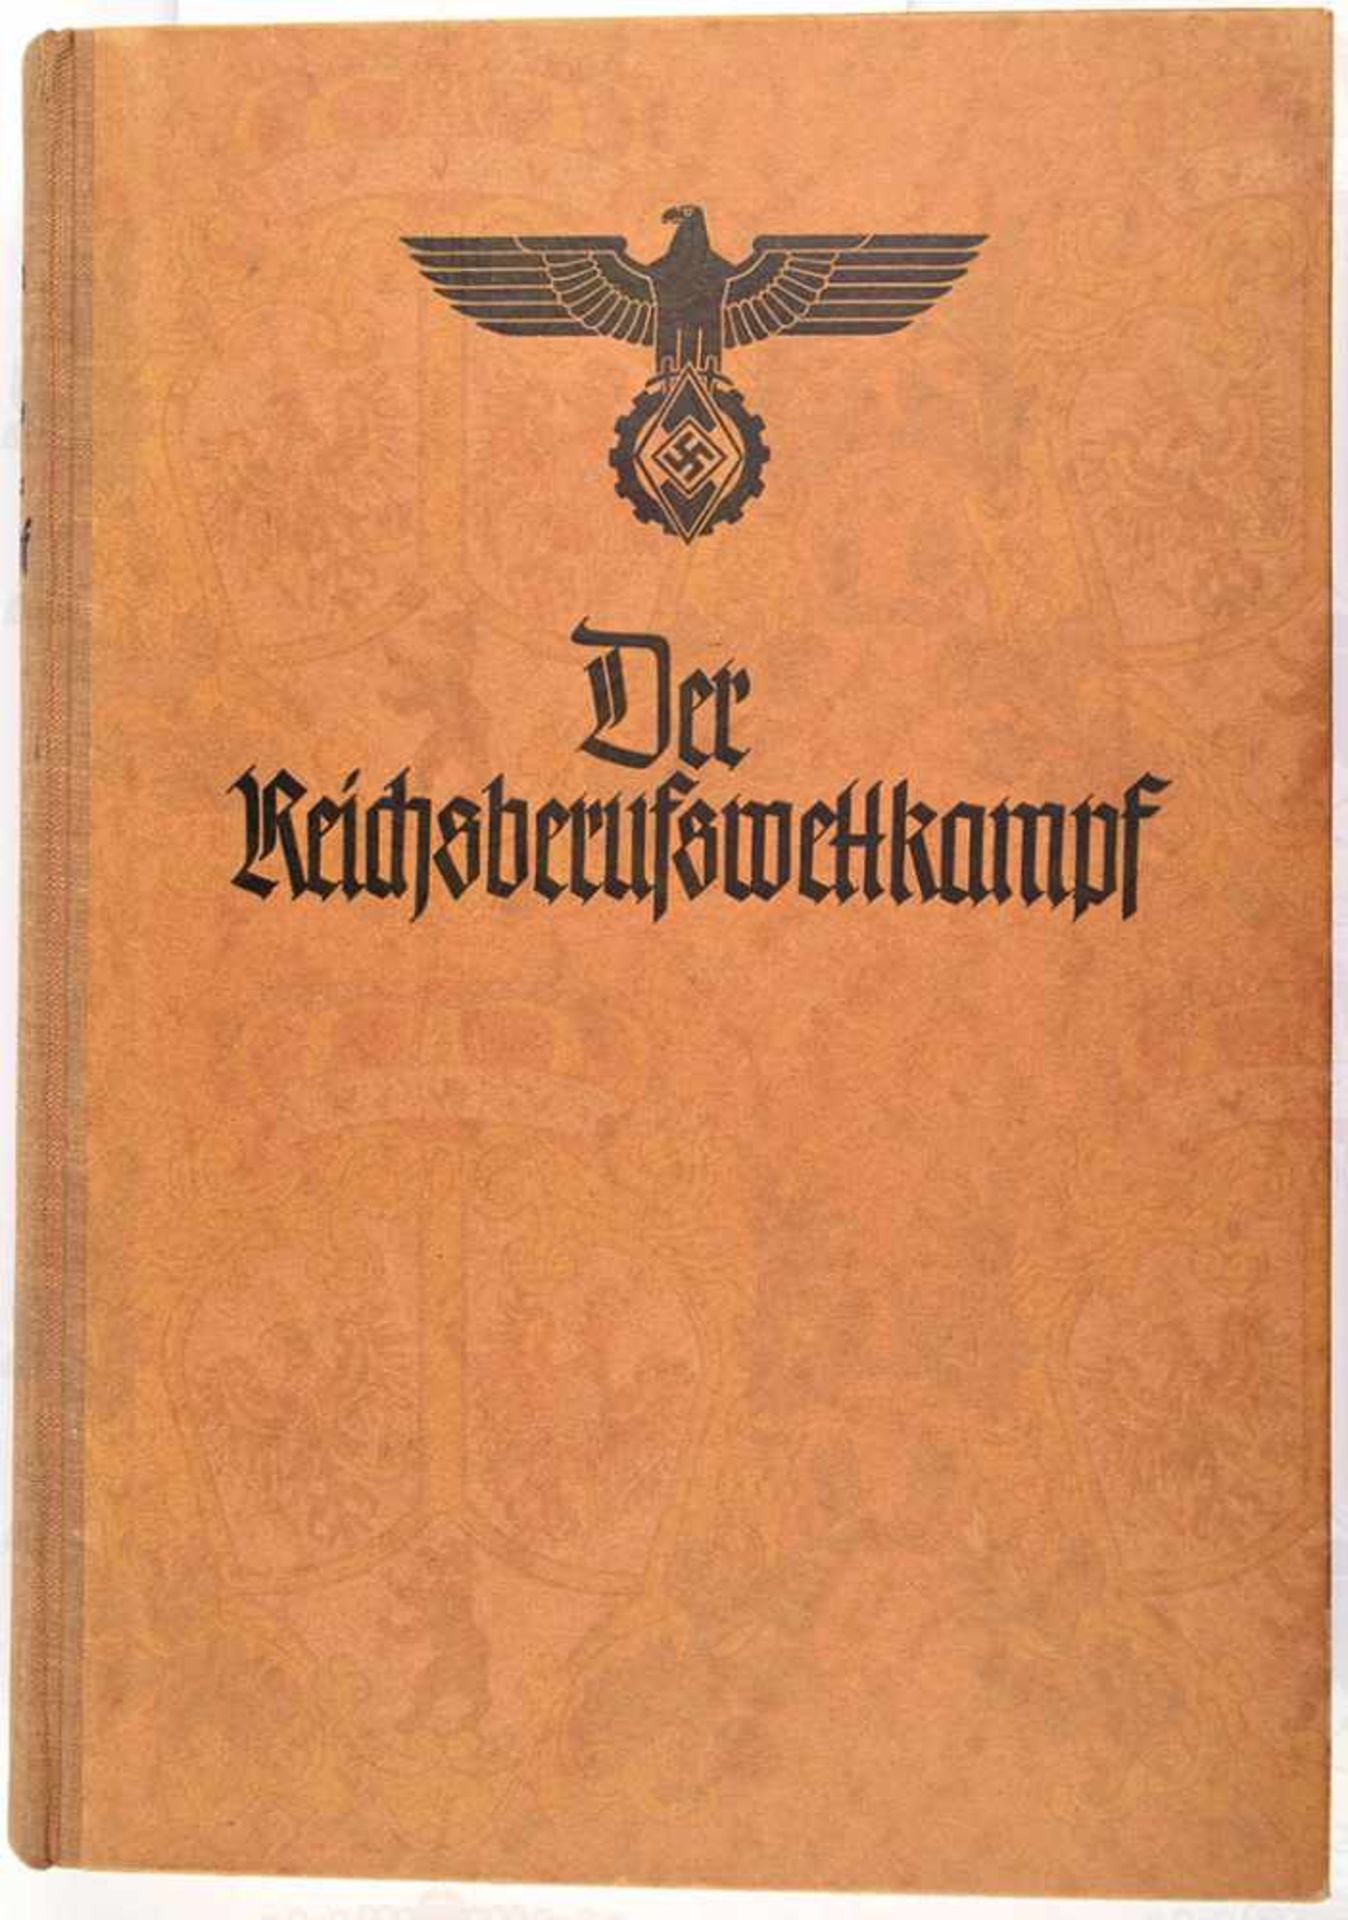 DER REICHSBERUFSWETTKAMPF, Obergebietsführer Artur Axmann, Bln. 1938, zahlr. Fotos, 382